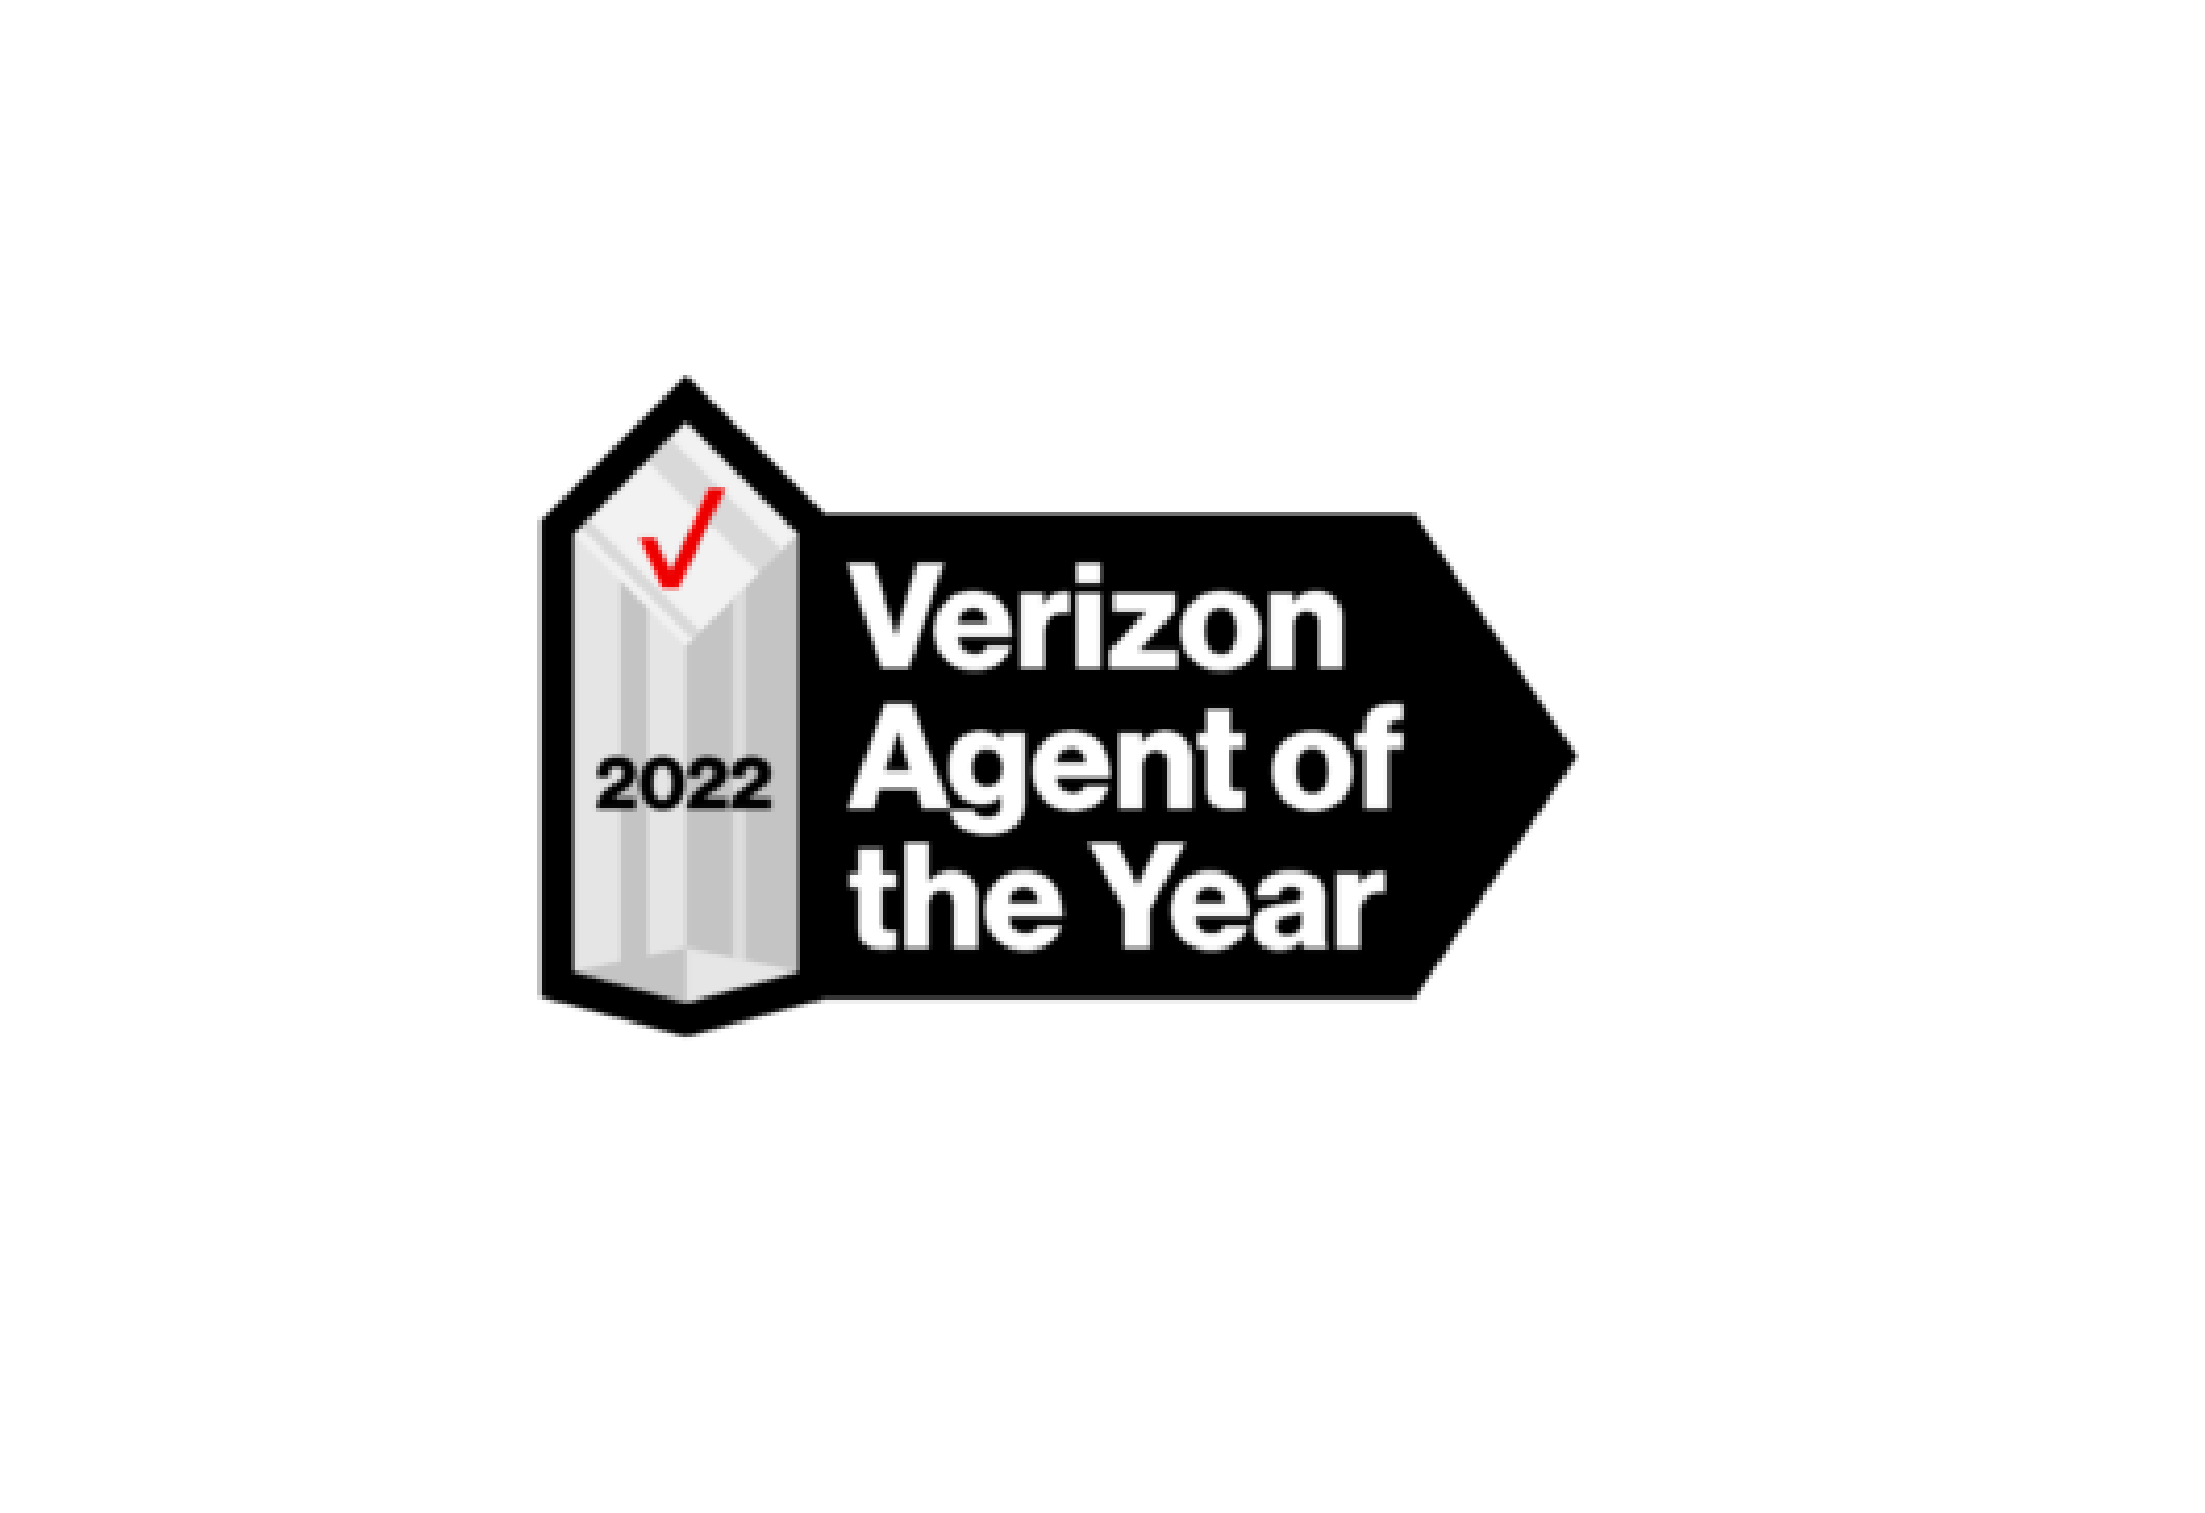 Verizon agent of the year award 2022